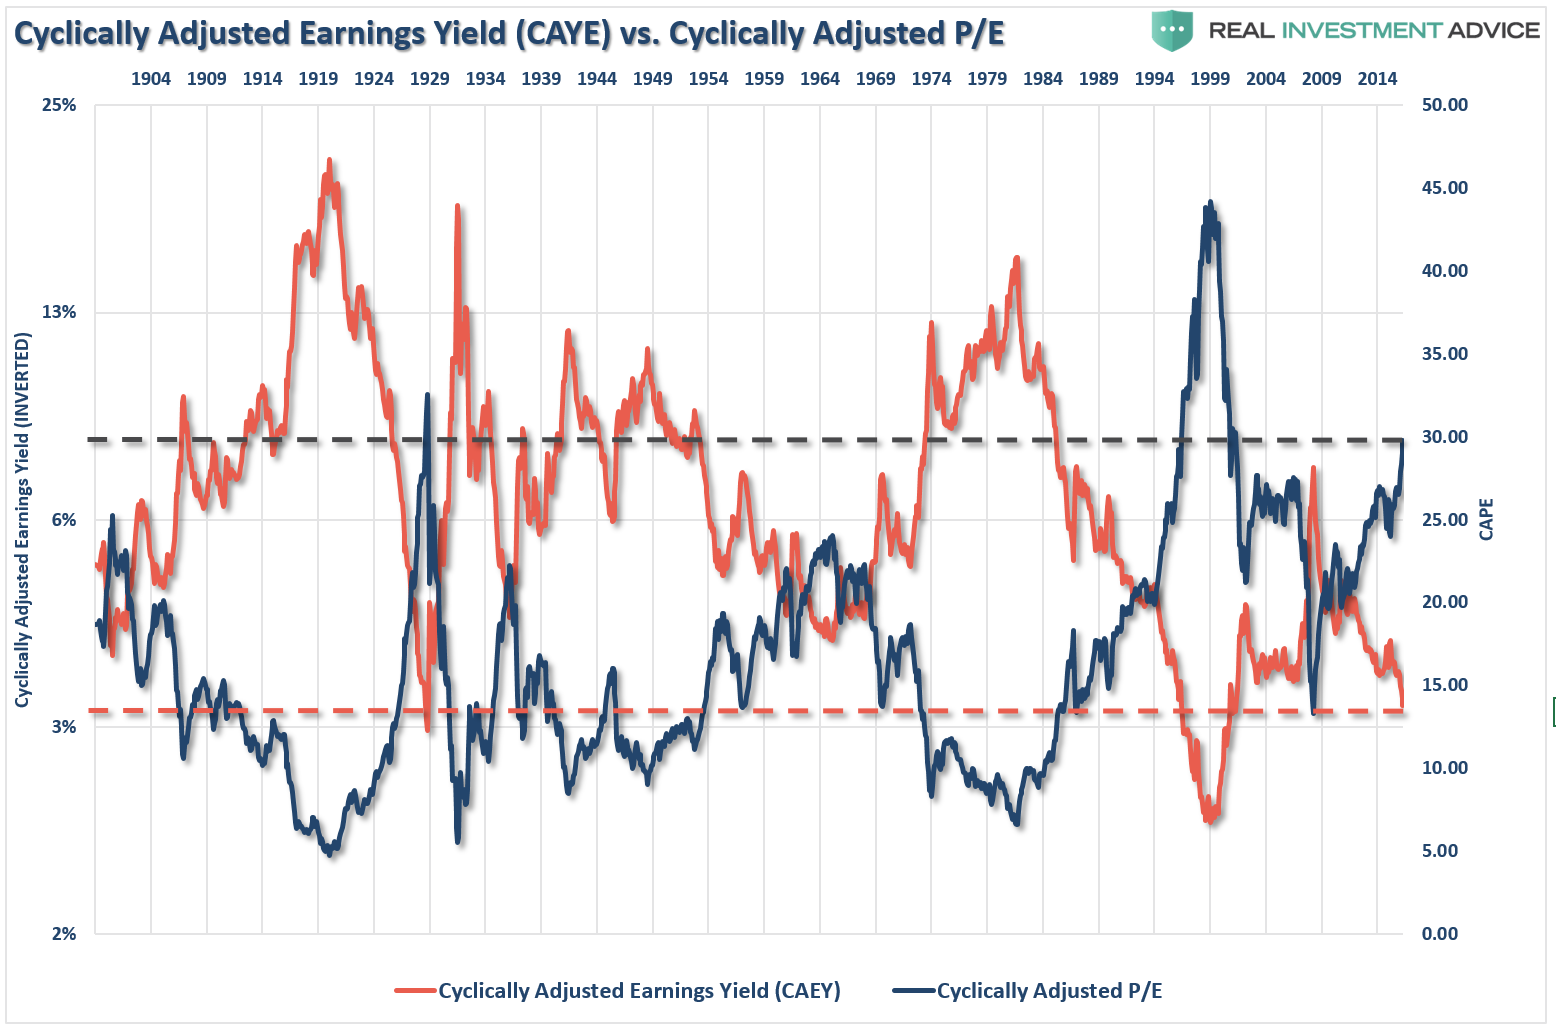 CAEY vs Cyclically Adjusted P/E 1904-2014